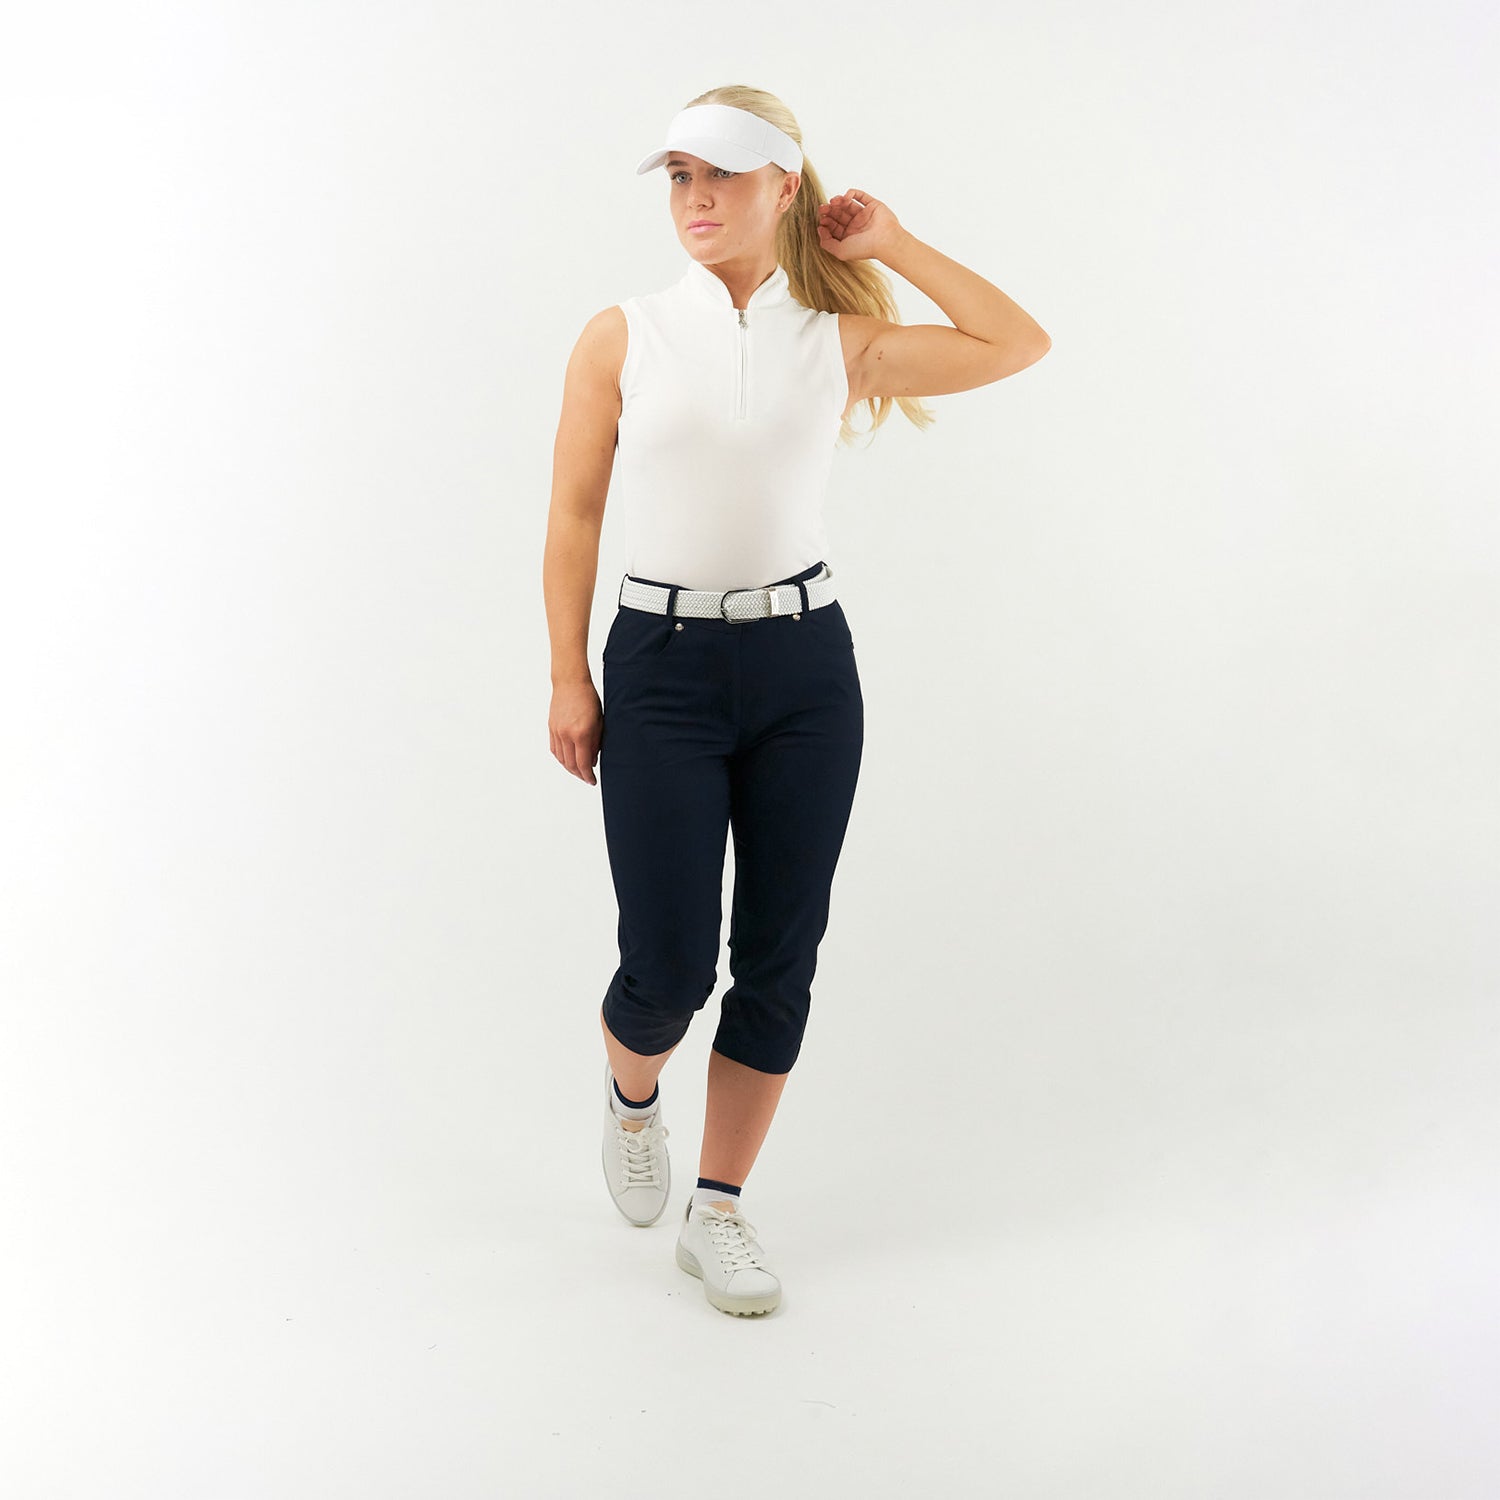 Surprizeshop Ladies Elasticated Braided Stretch Golf Belt in White